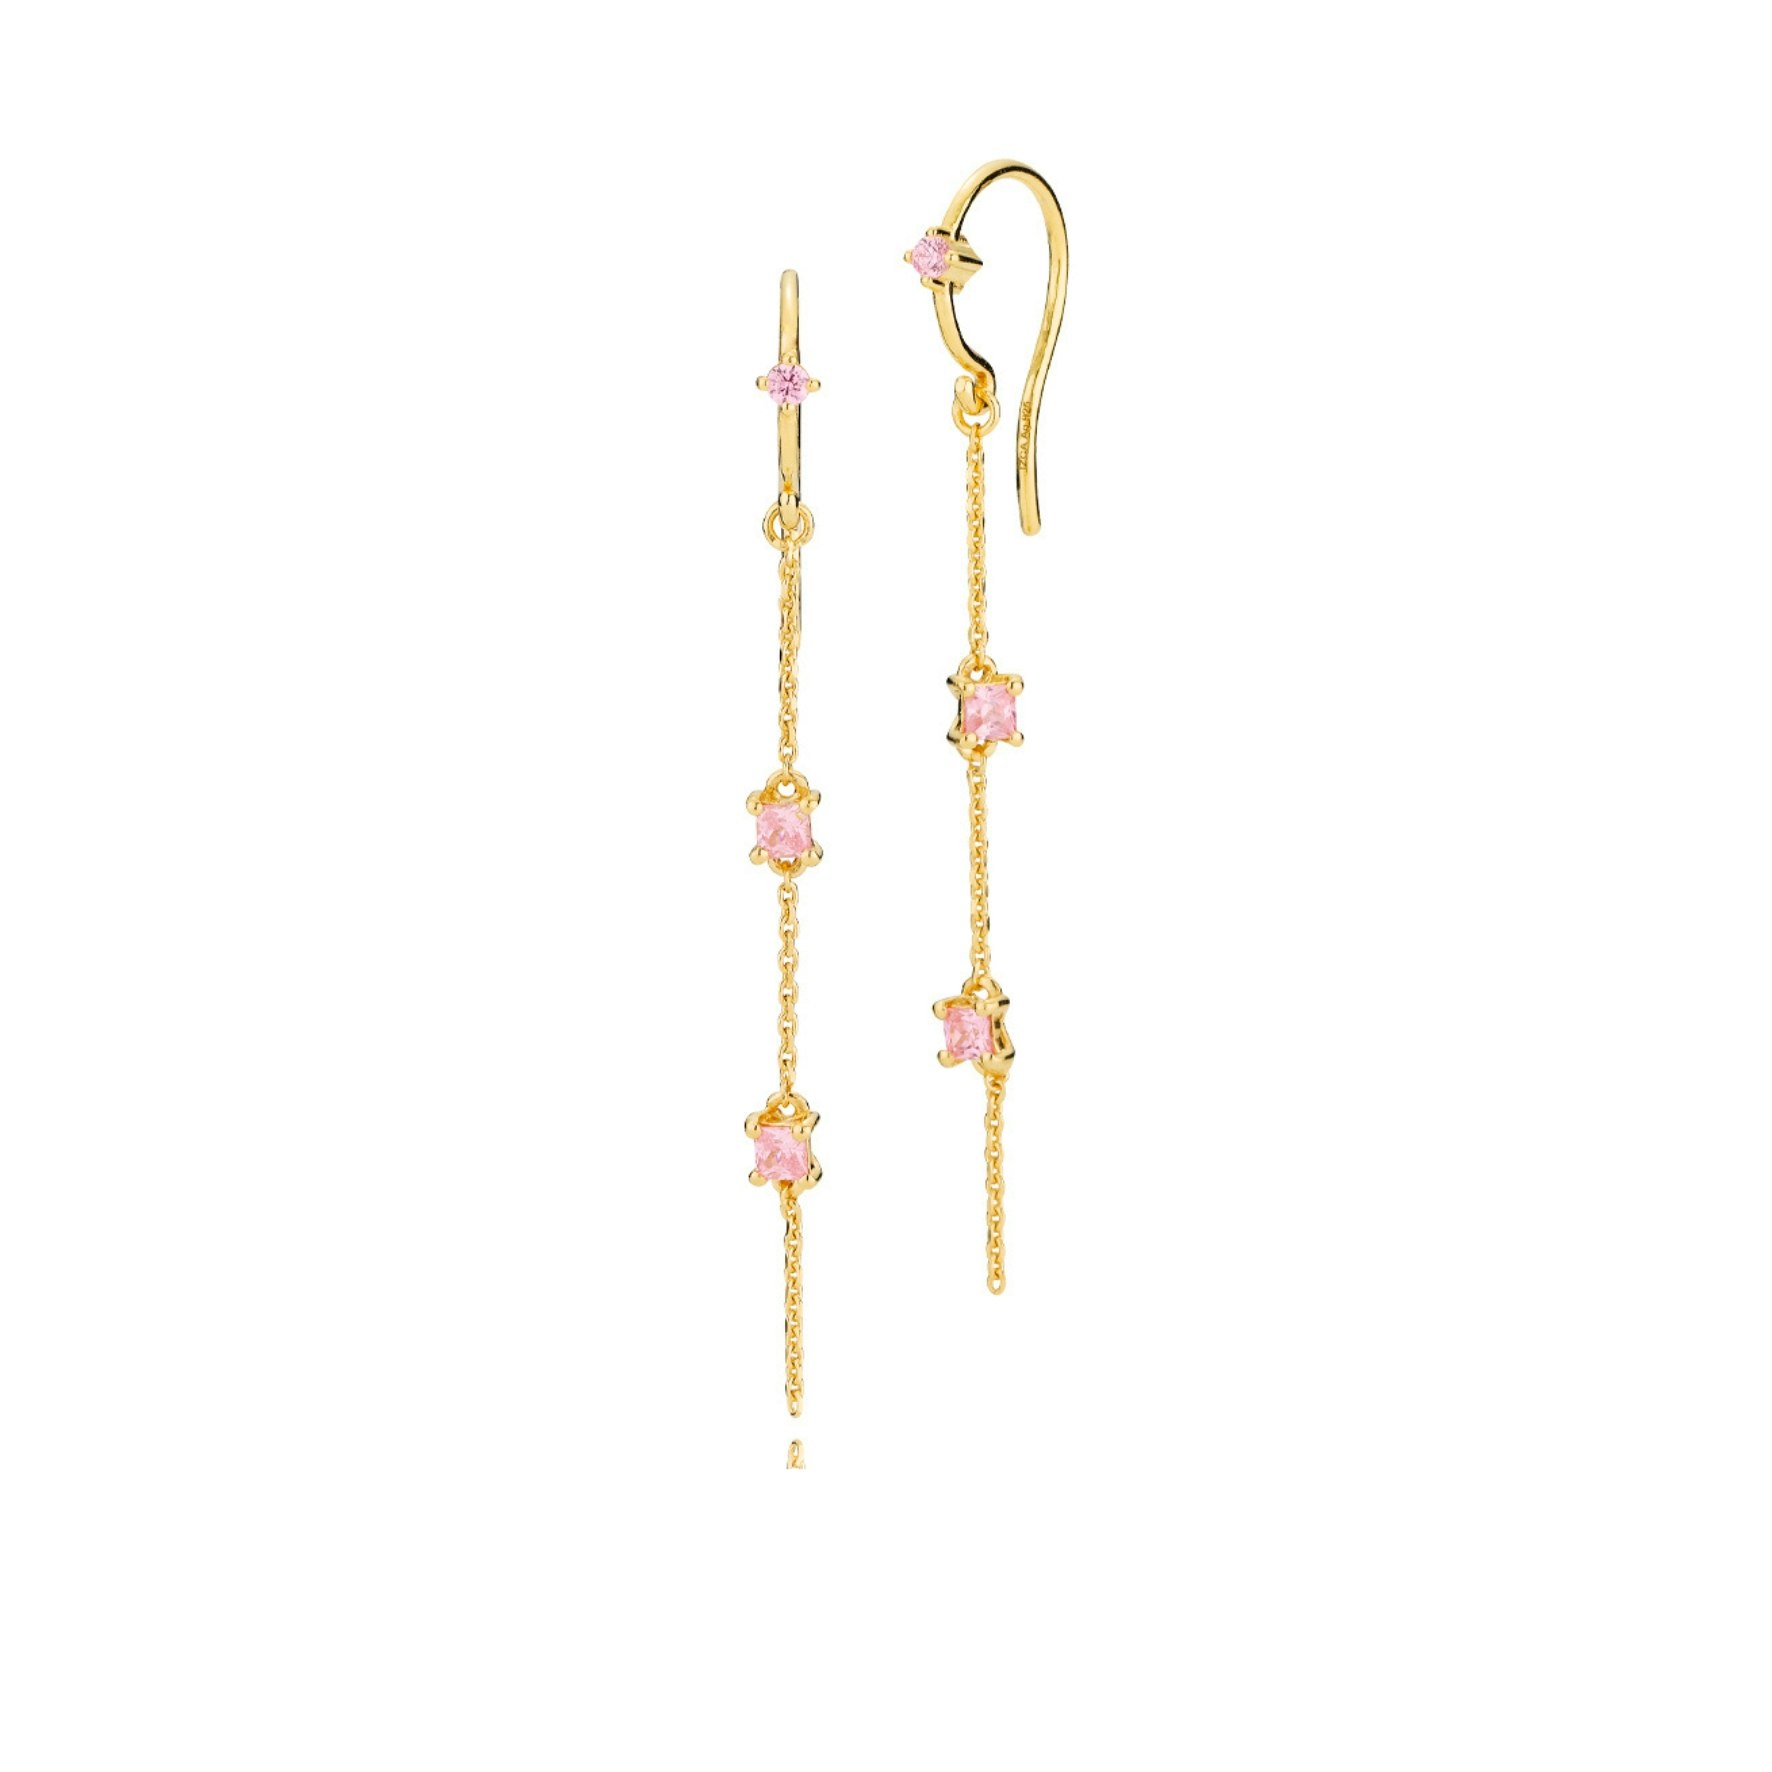 Angelina Pink Chain Earrings von Izabel Camille in Vergoldet-Silber Sterling 925